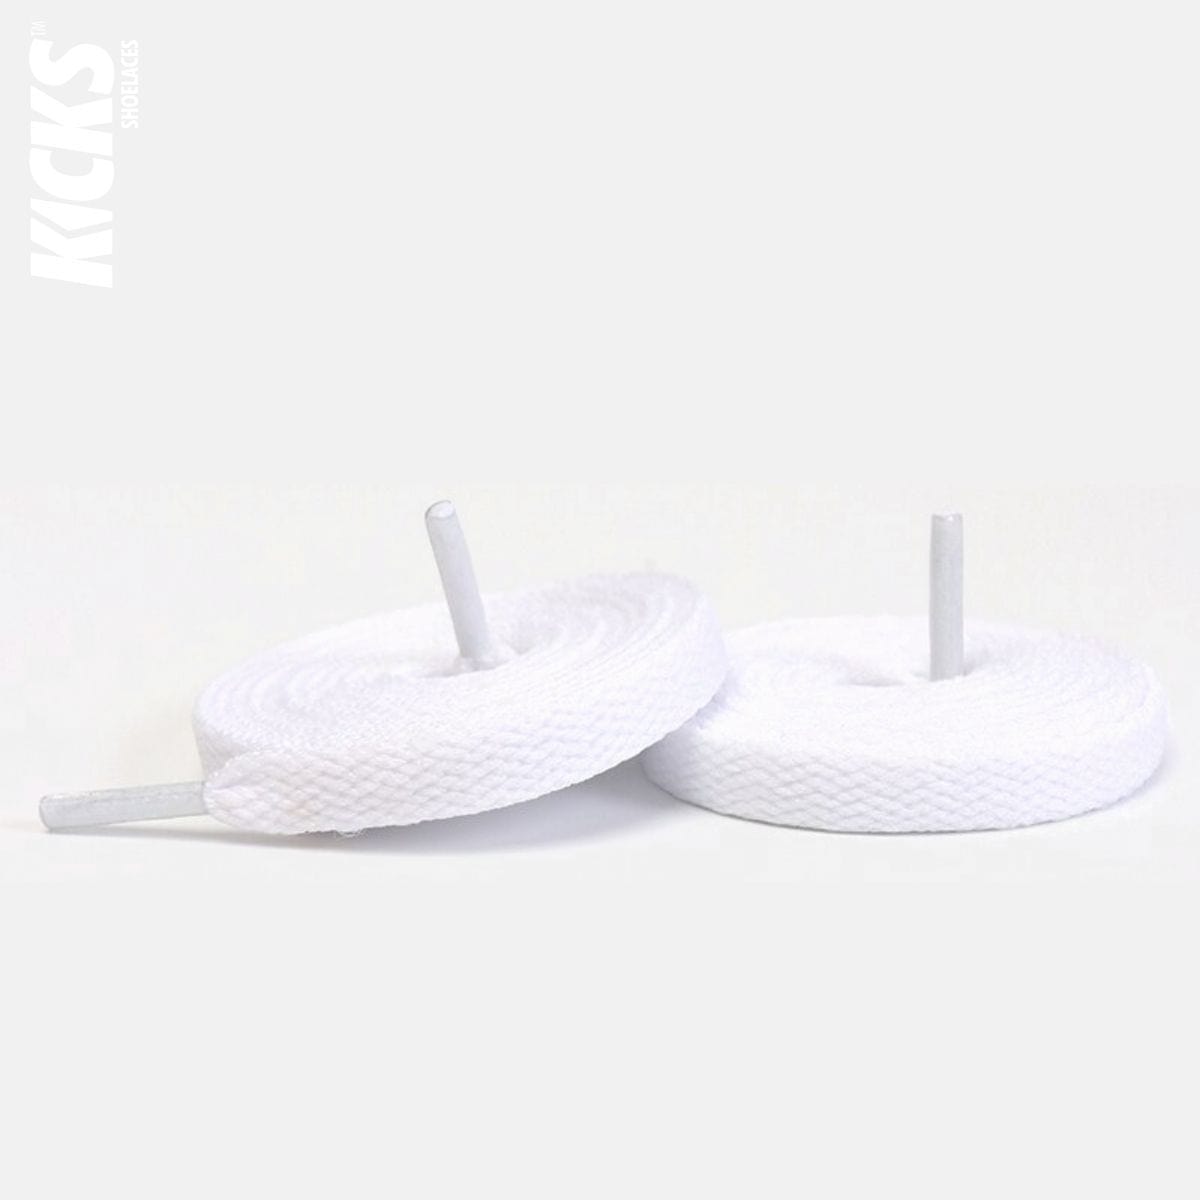 White Replacement Jordan Laces for Nike Air Jordan 1 Shoes by Kicks Shoelaces